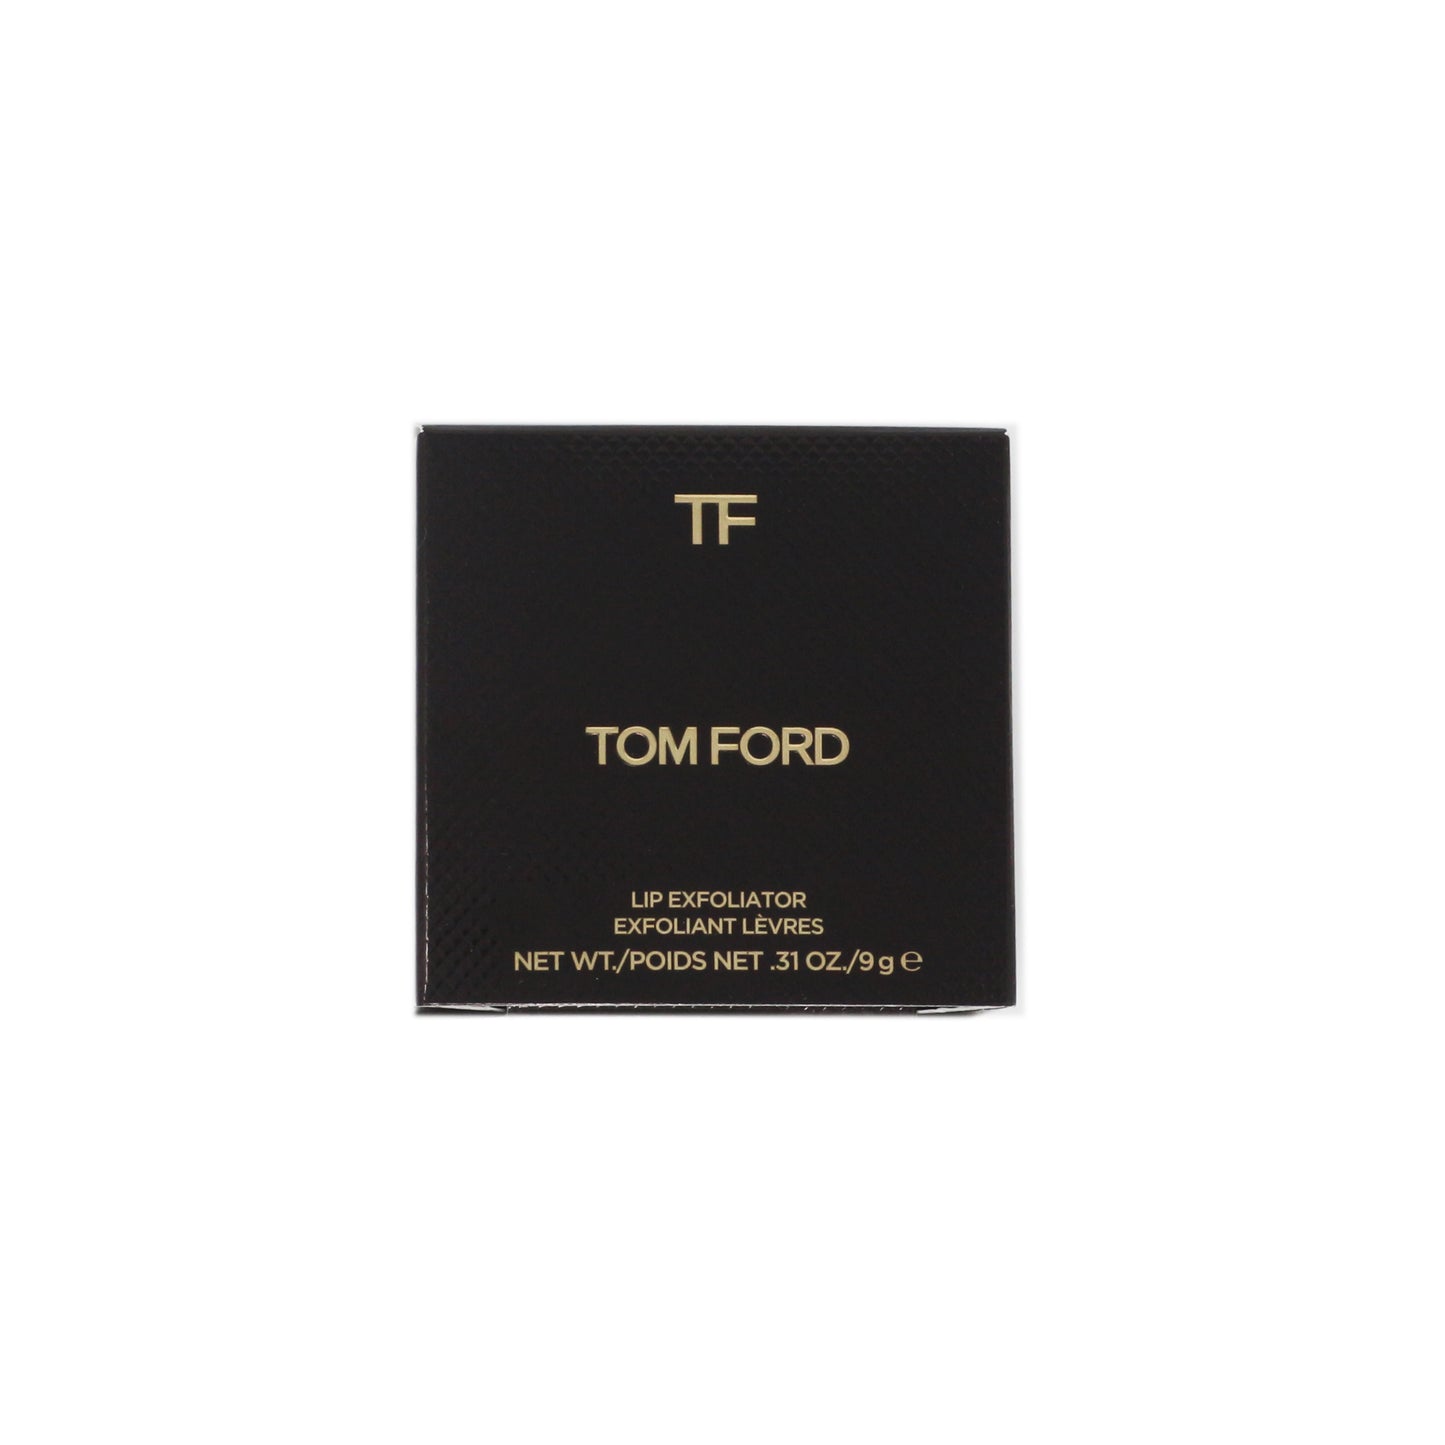 Tom Ford Lip Exfoliator 0.31oz/9g New In Box